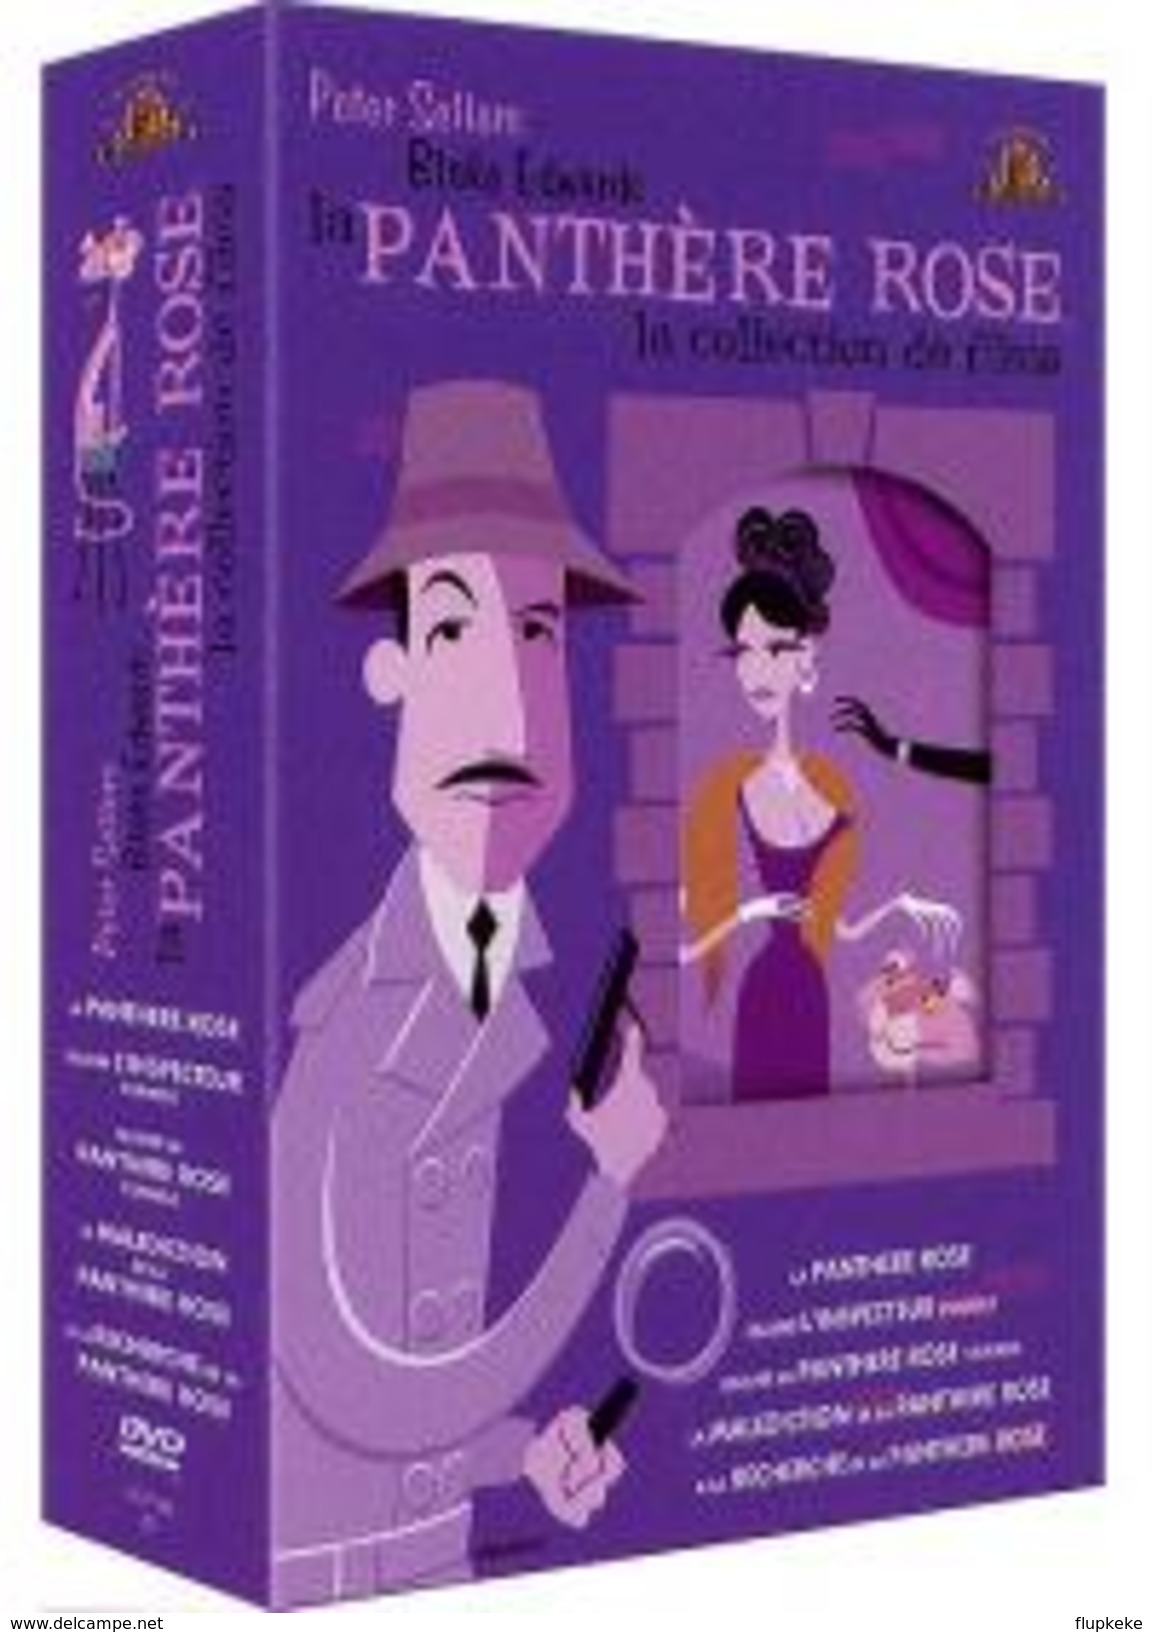 Dvd Zone 2 La Panthère rose la collection de films (2003) The Pink Panther Film Collection vf+Vostfr